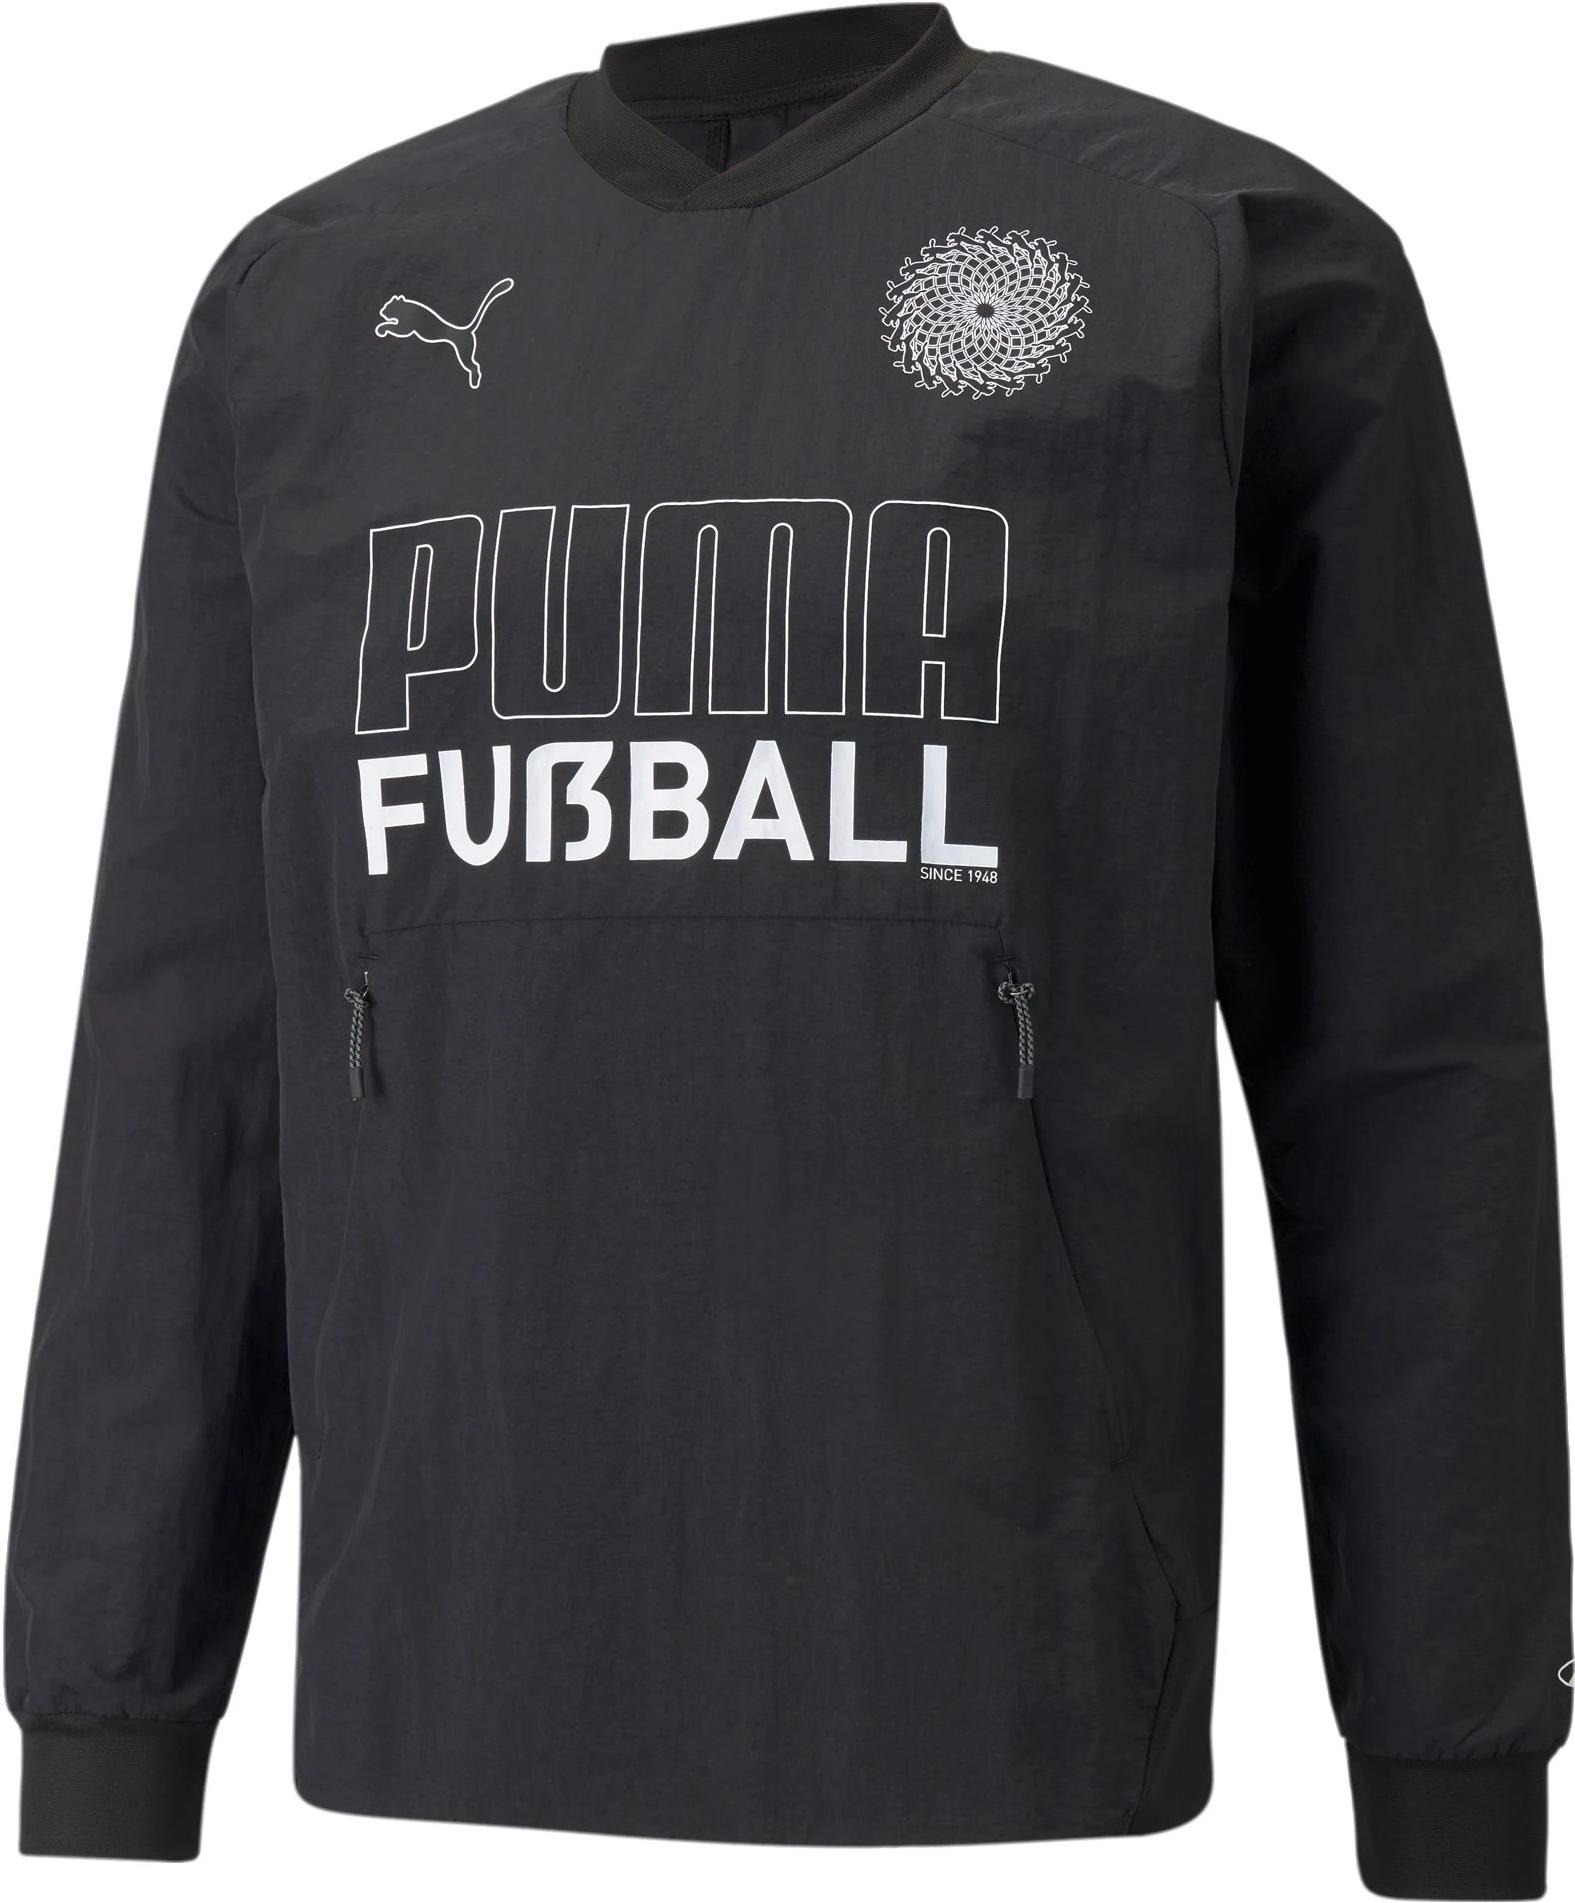 Long-sleeve T-shirt Puma FUßBALL KING Drill Top